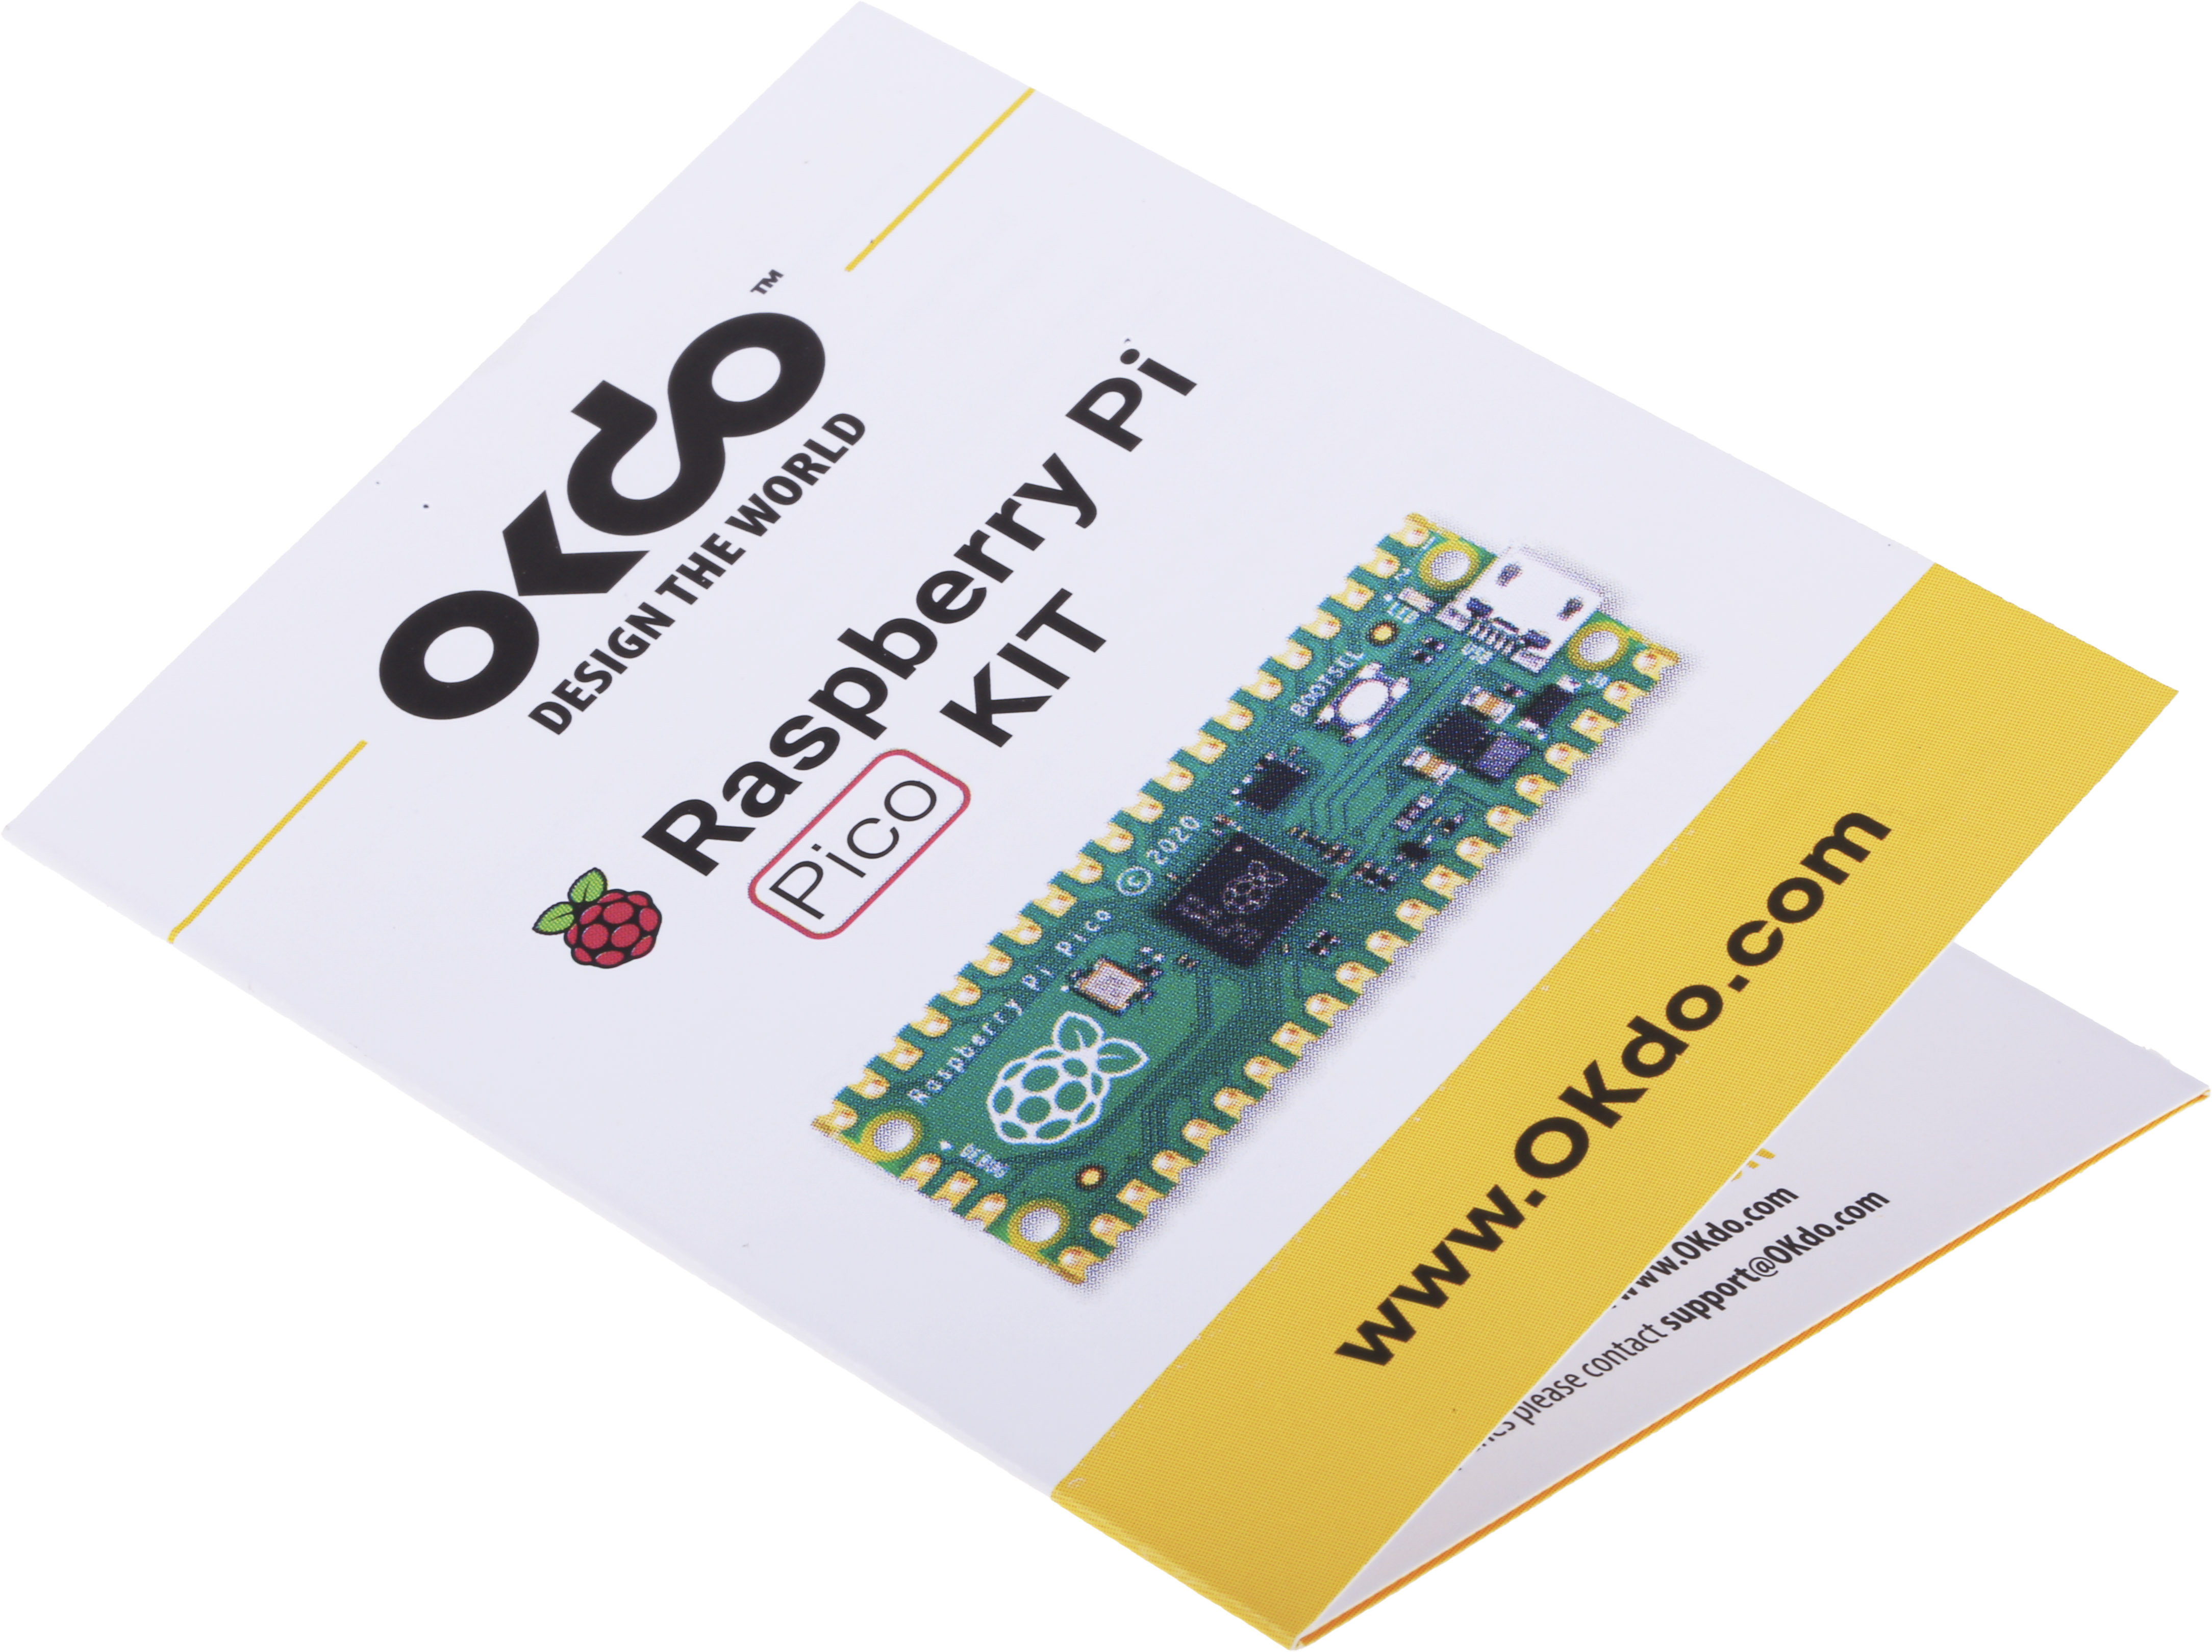 Get Started with Raspberry Pi Pico GPIO & MicroPython - OKdo